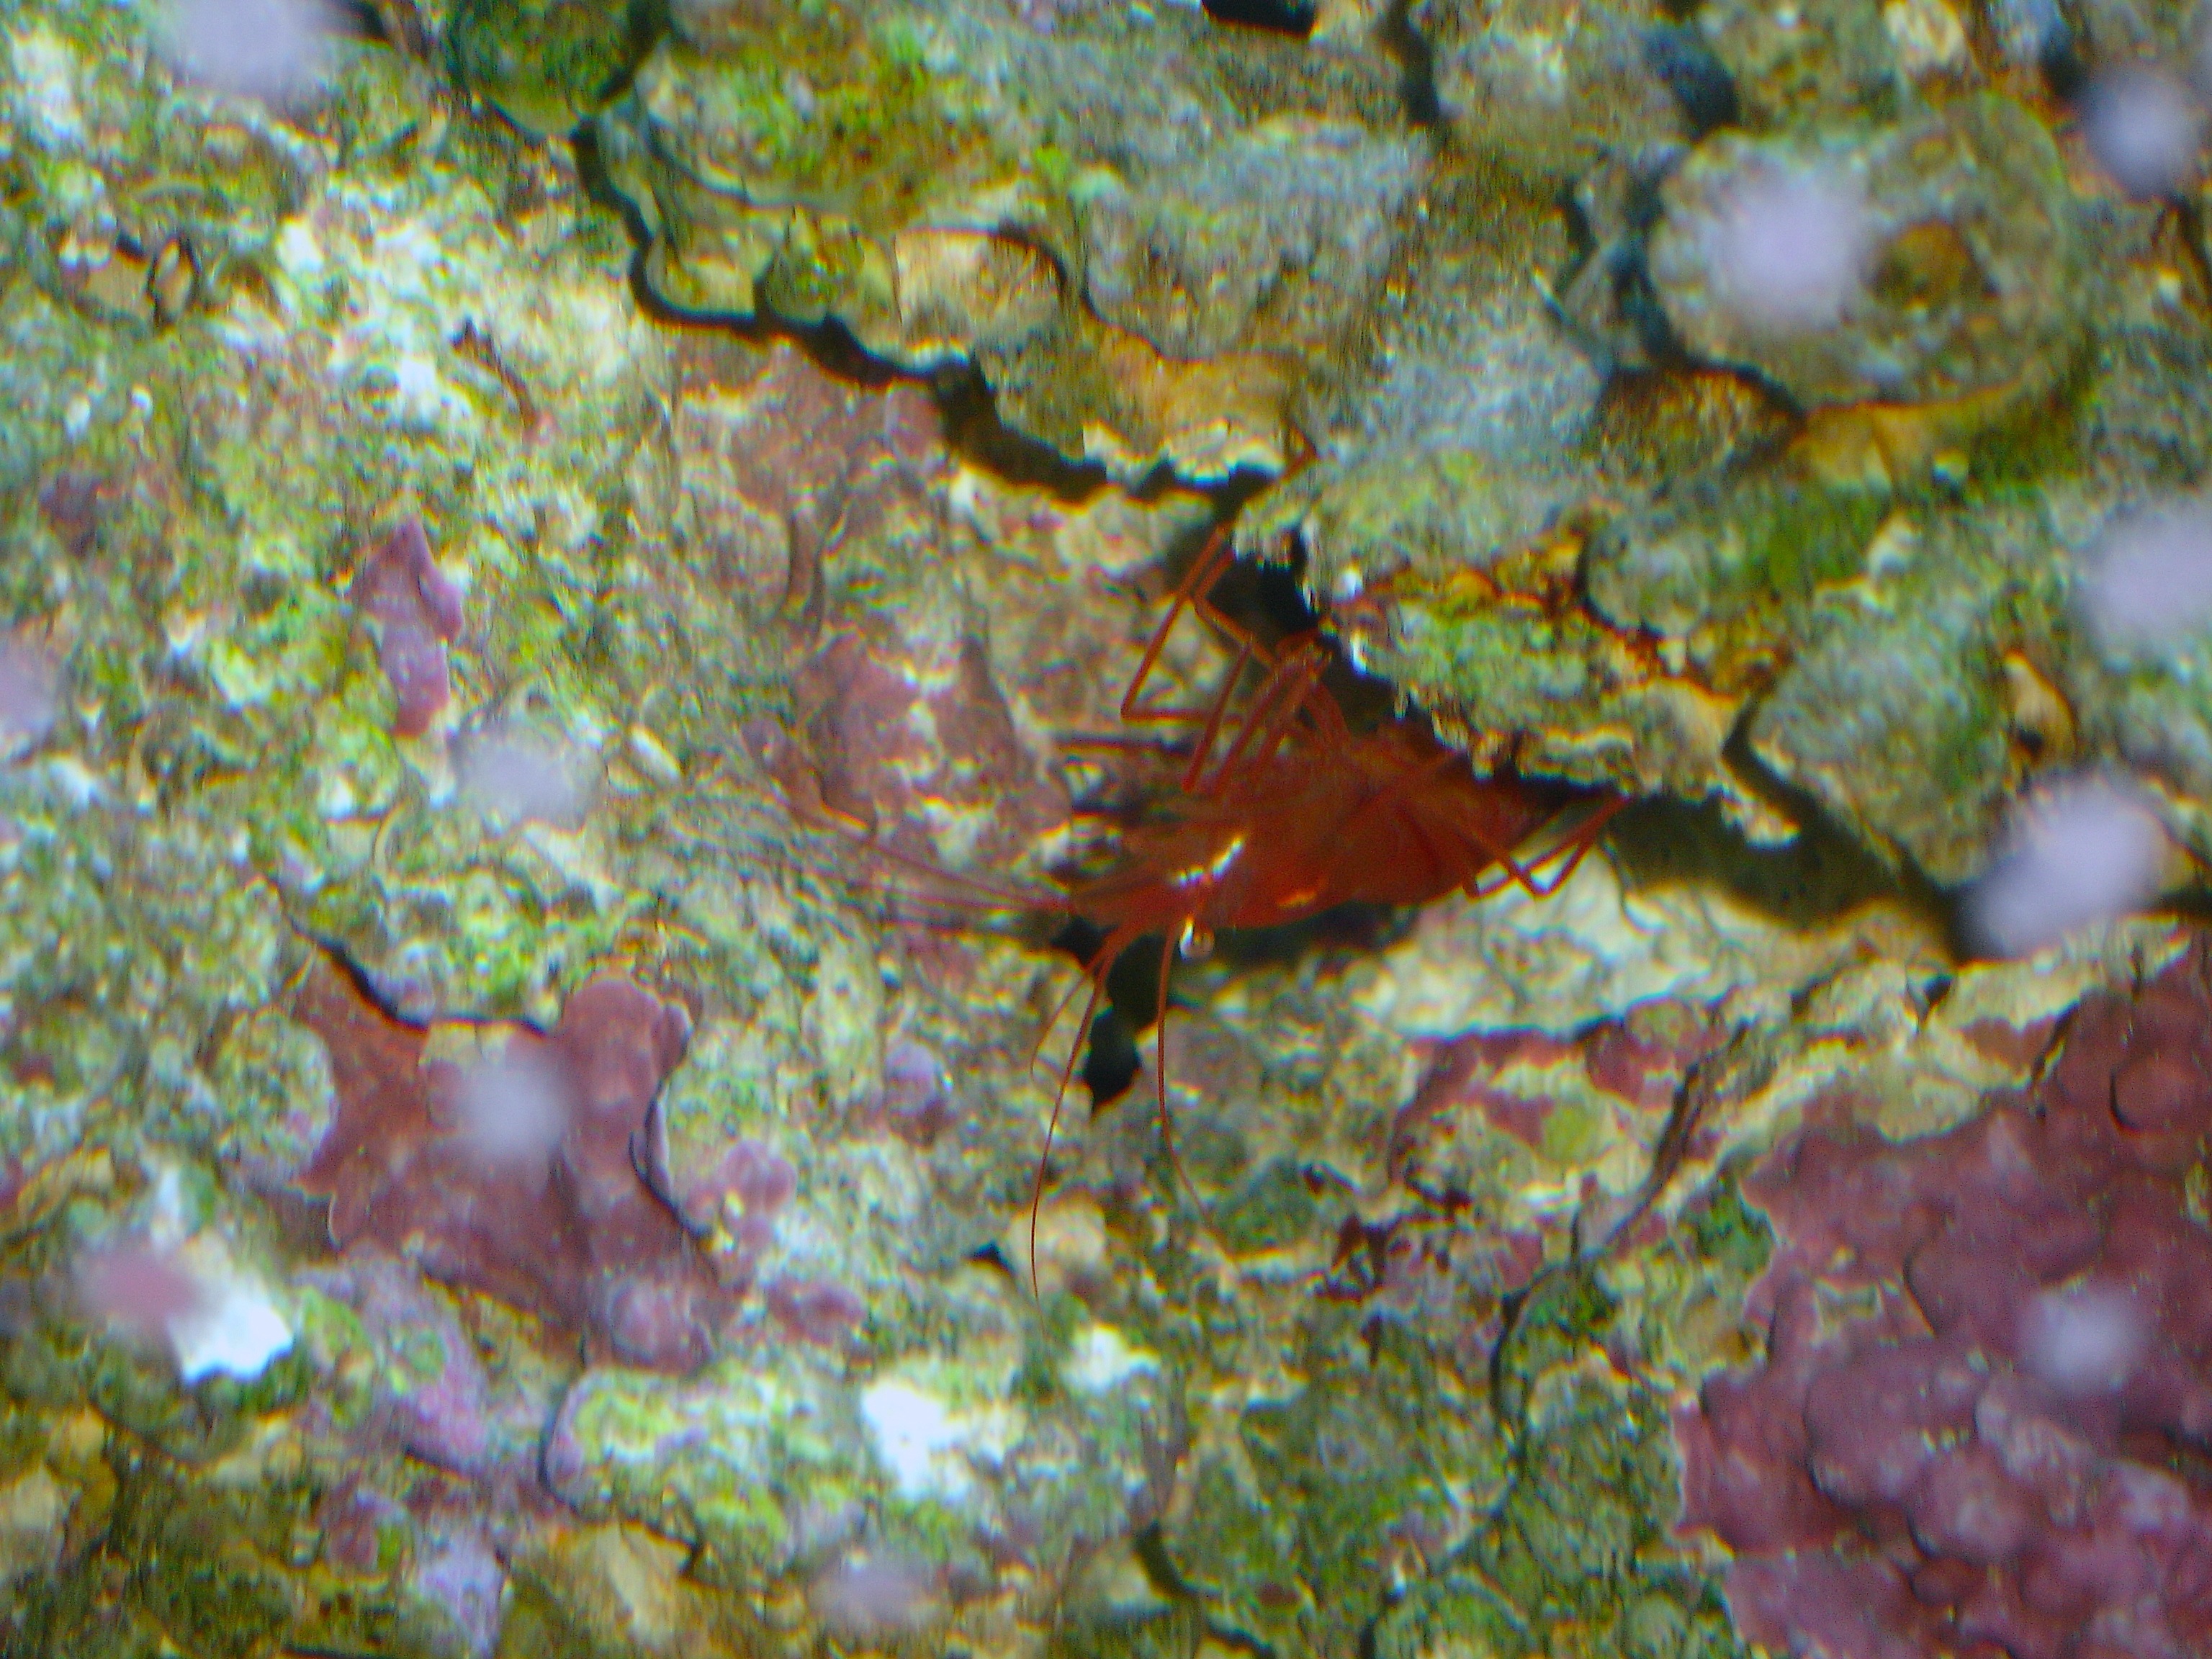 Peppermint Shrimp (Lysmata wundermanni)